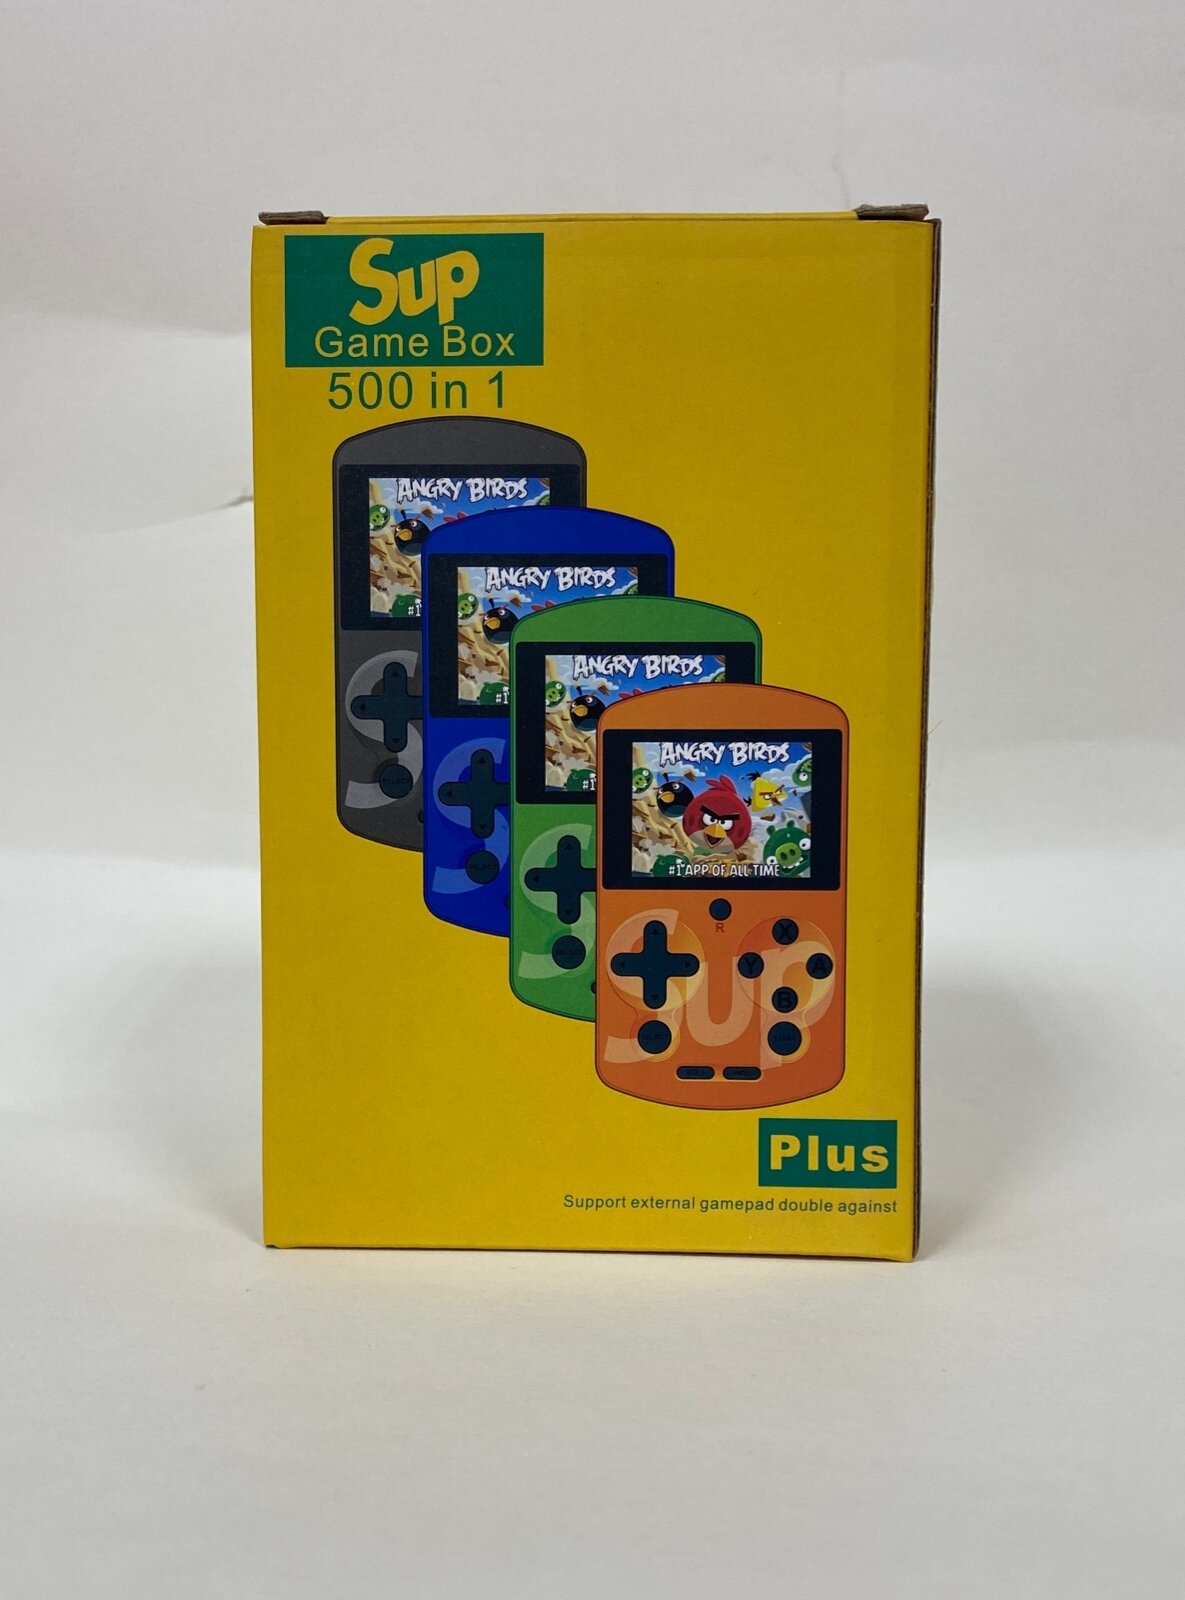   SUP Game Box Plus 500 in 1 (Green)